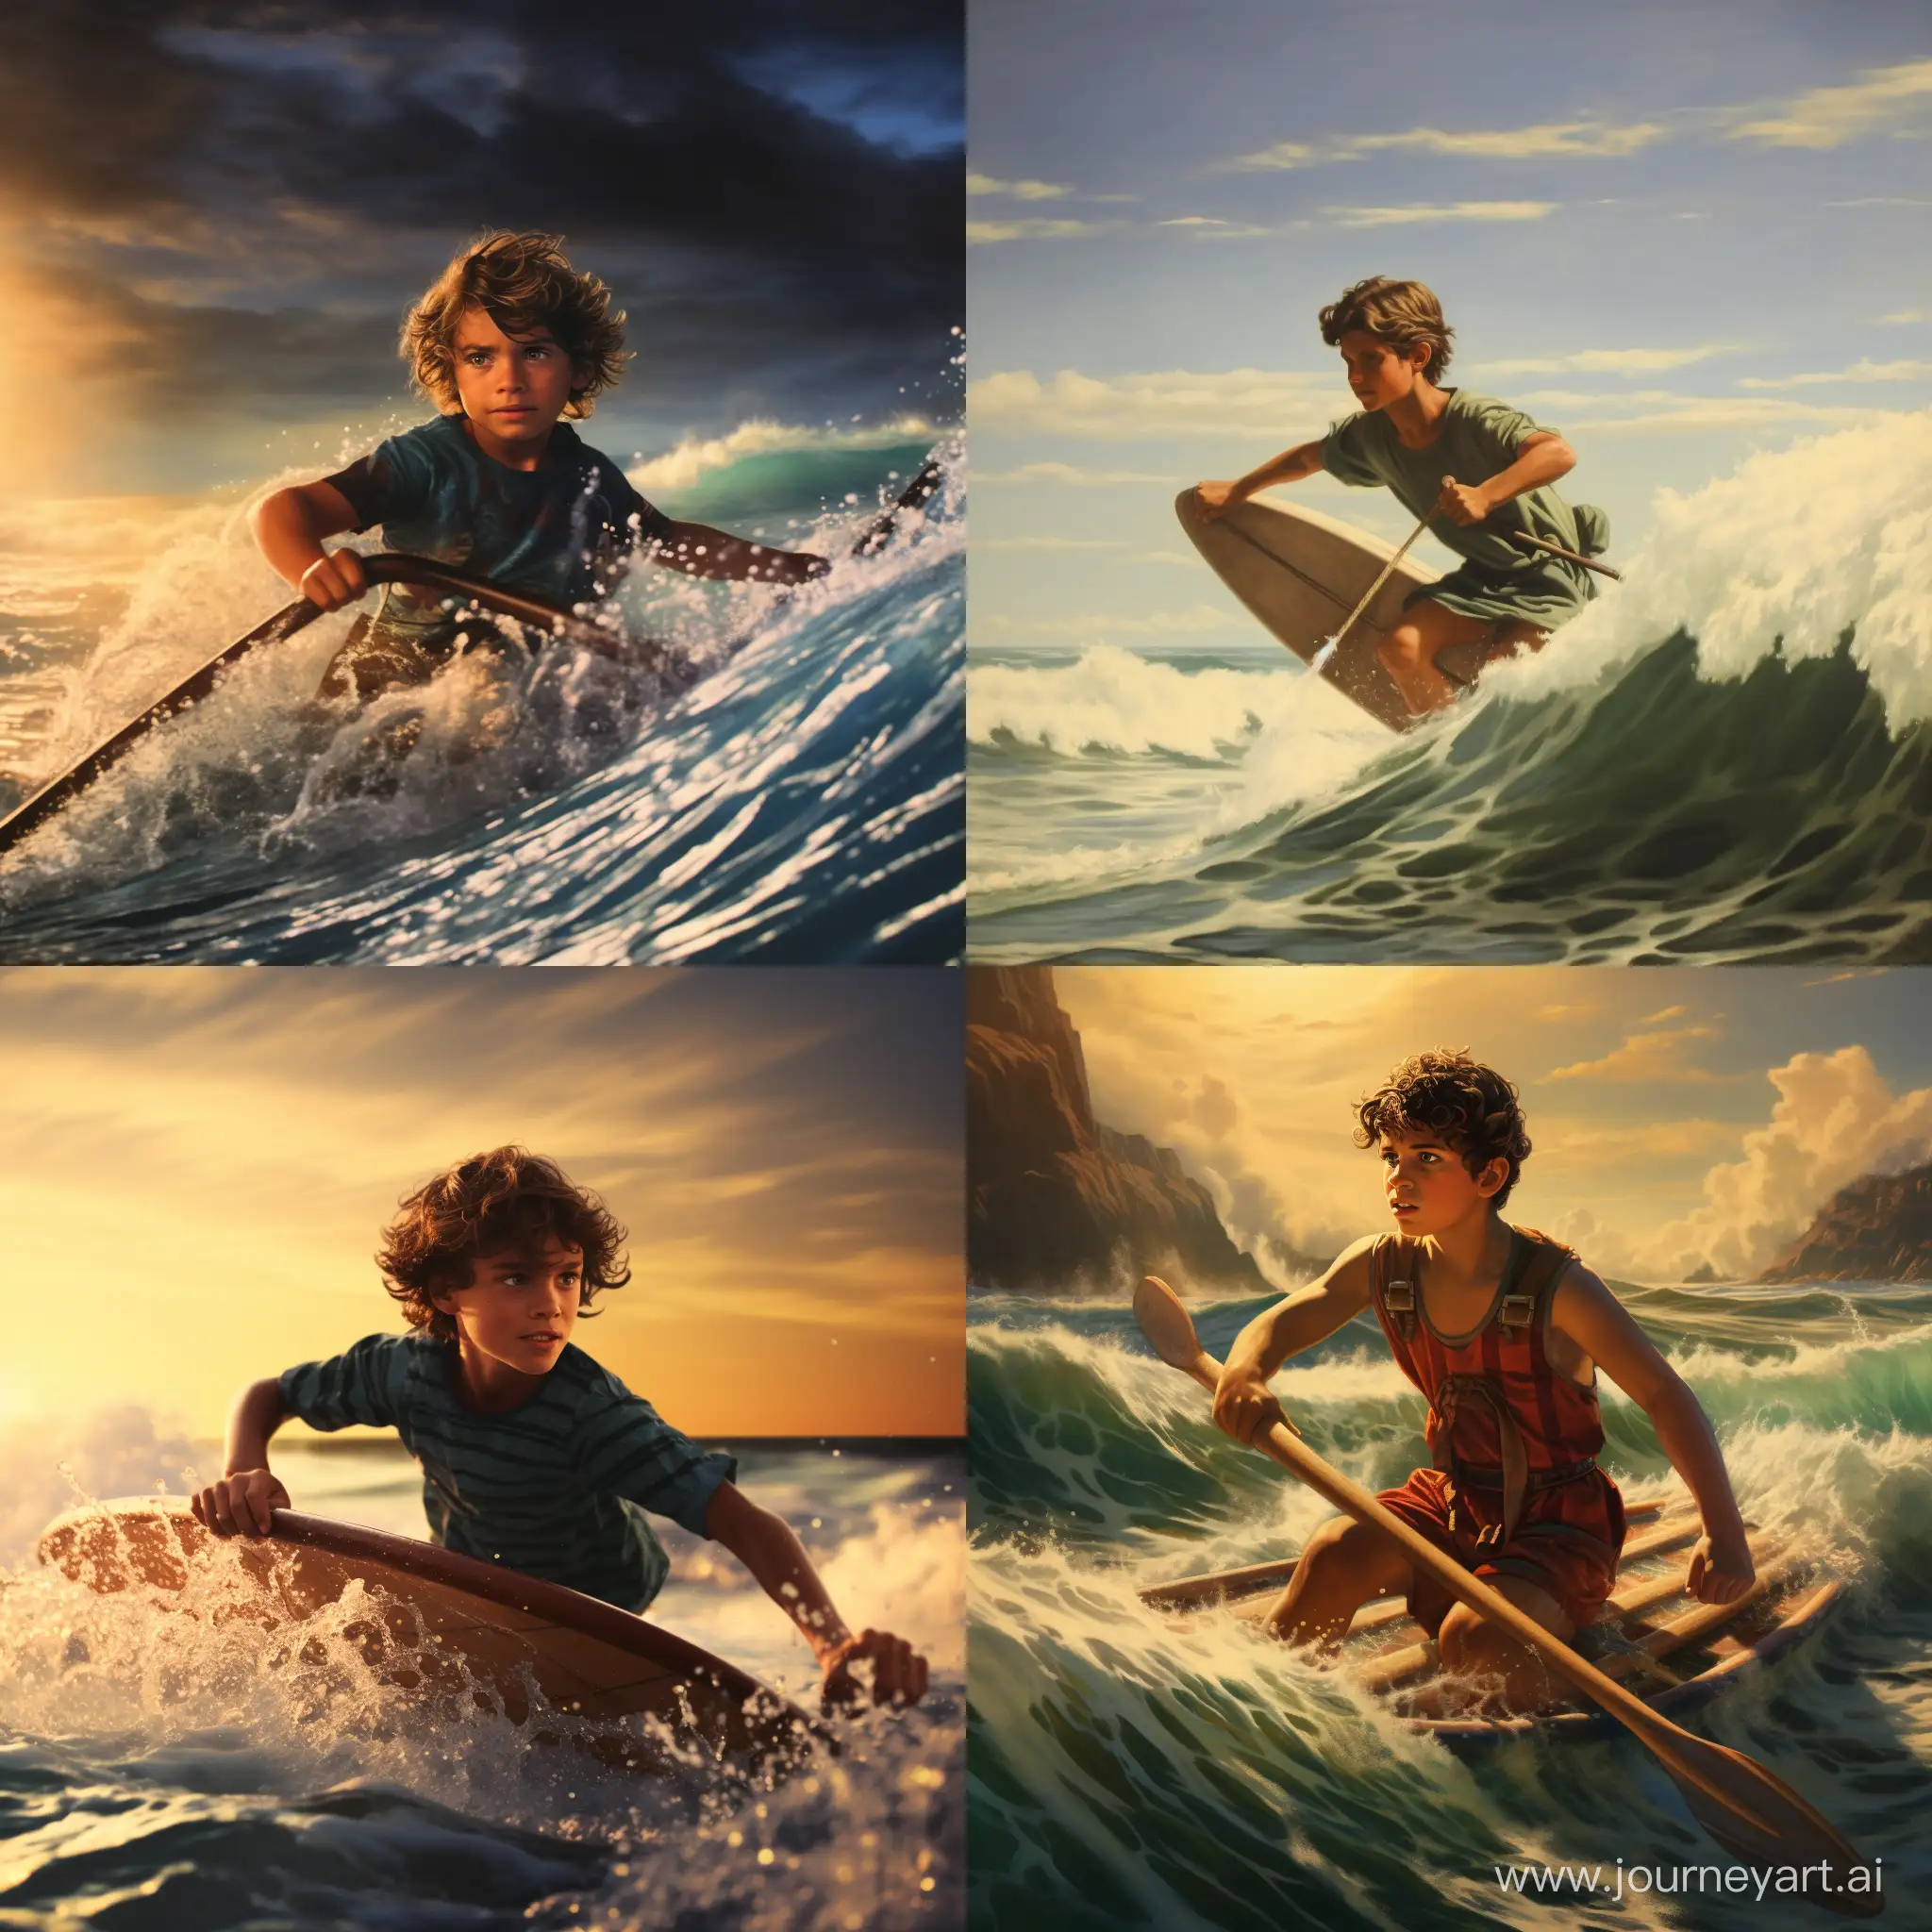 Roman-Boy-Enjoying-Idyllic-Surfing-Experience-in-the-Italian-Sea